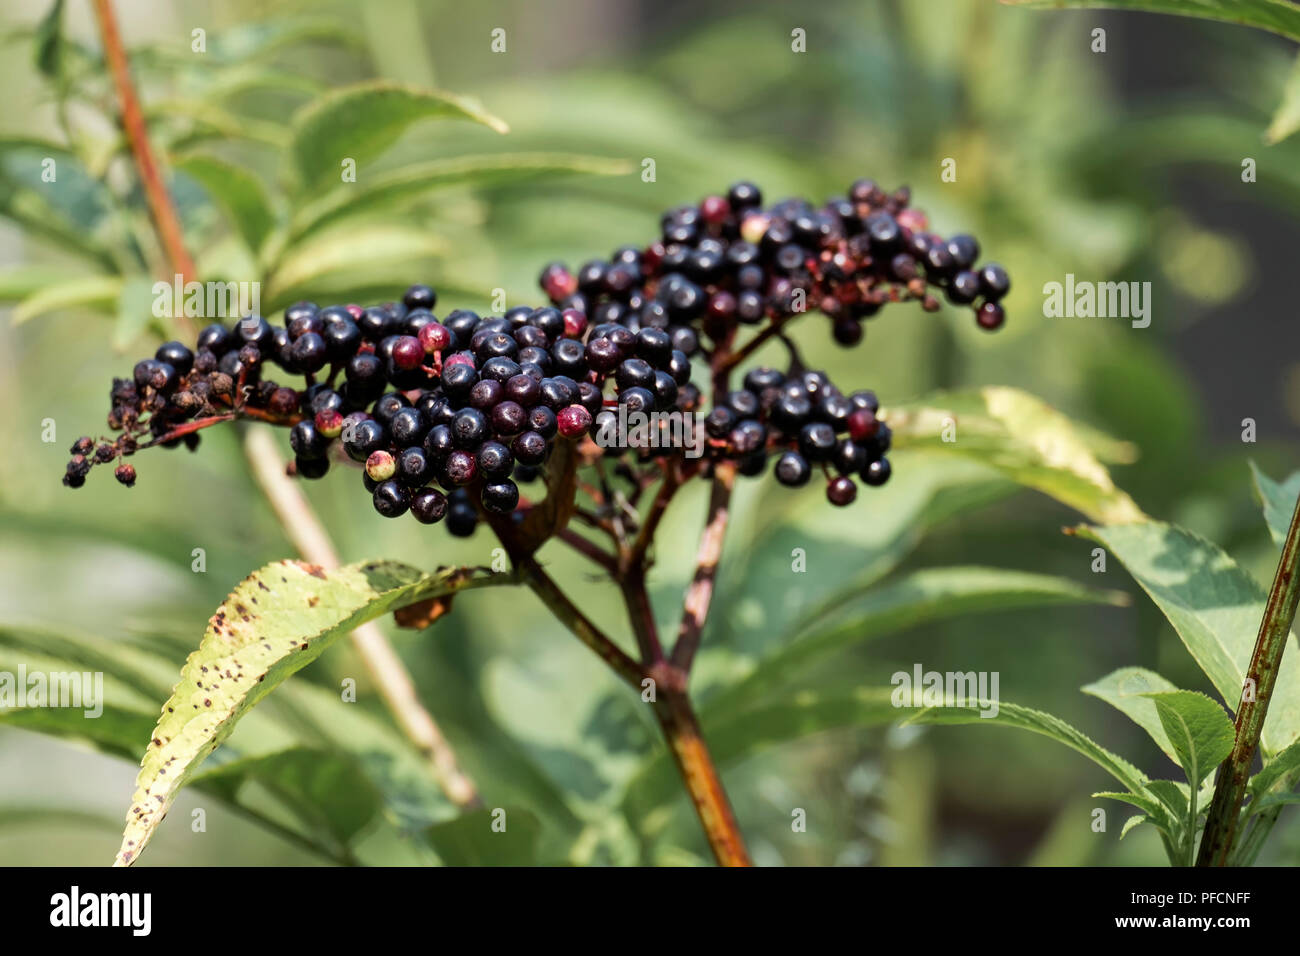 Bunch of ripe dwarf elder berries. Danewort berries (Sambucus ebulus) Stock Photo